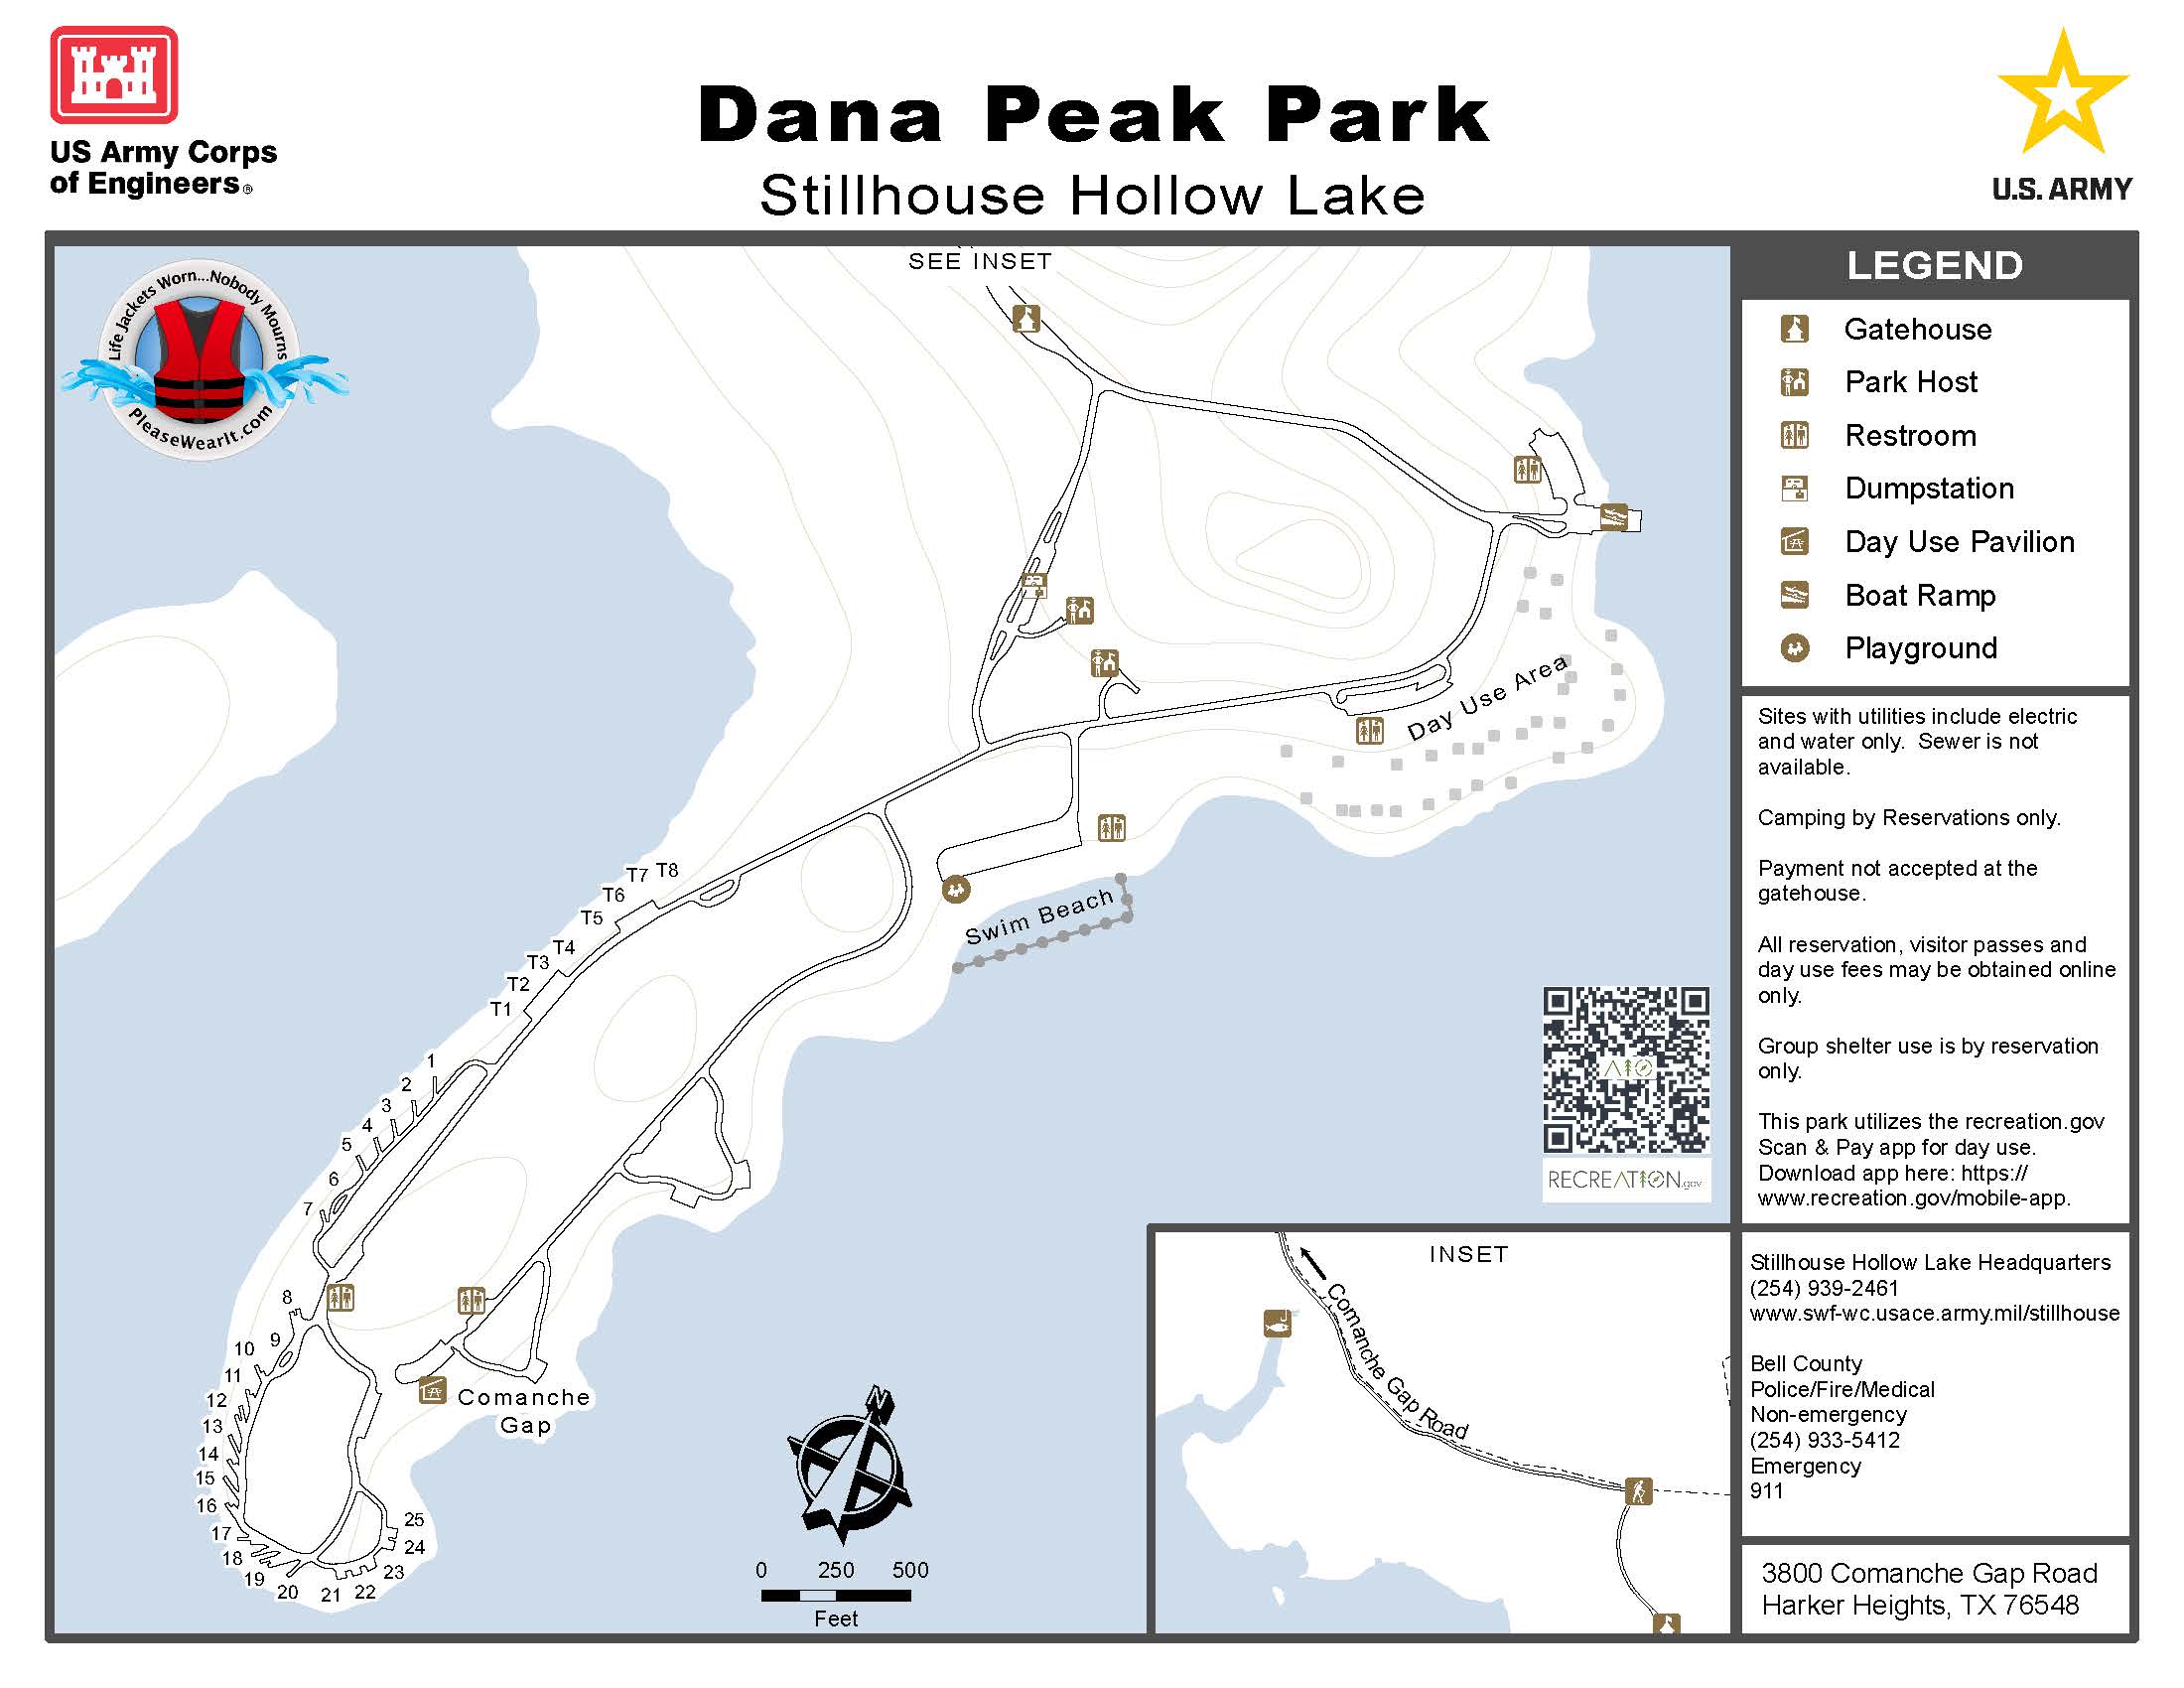 Dana Peak Park